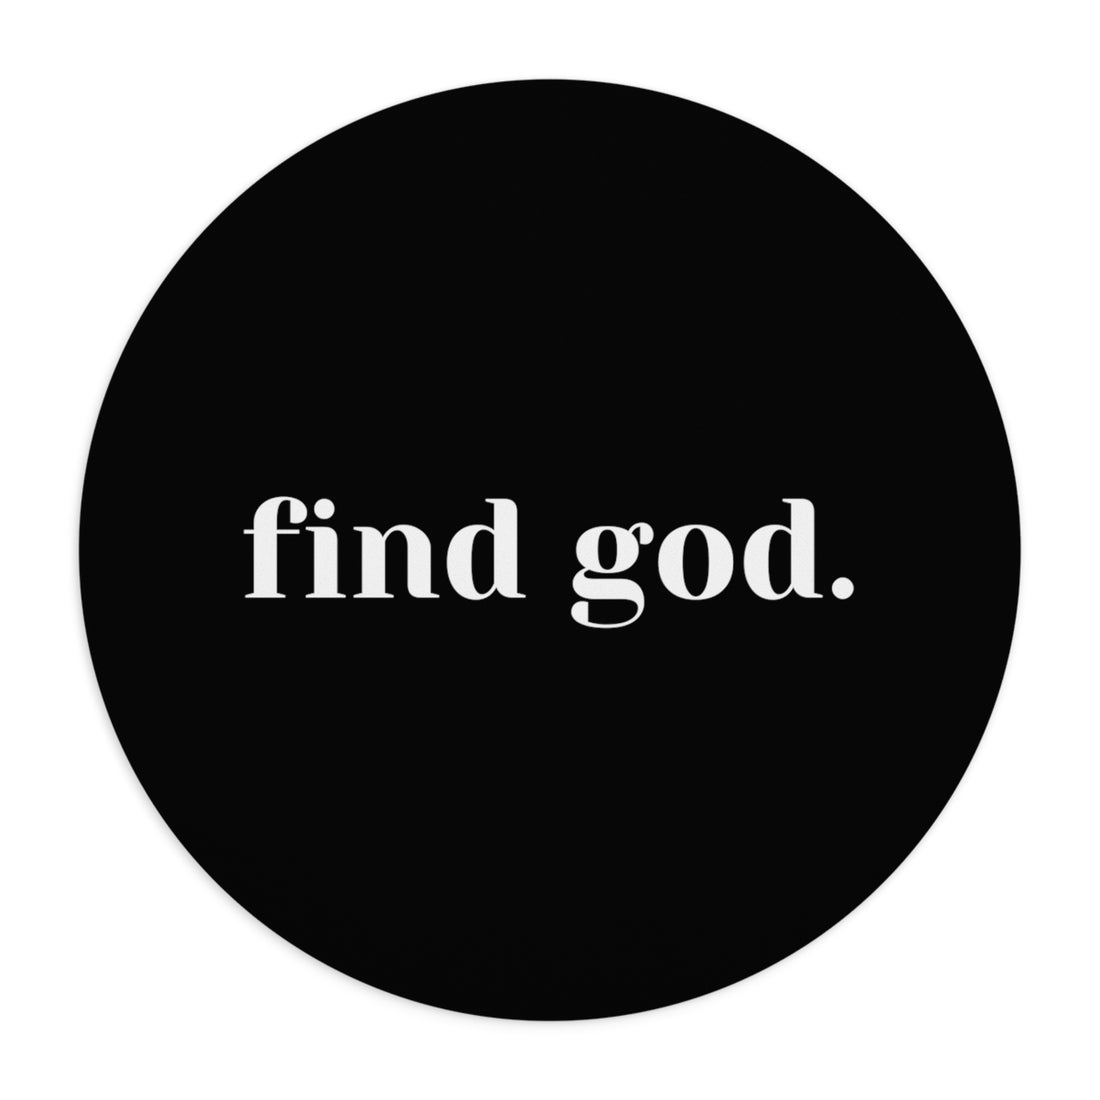 Find God. Mouse Pad